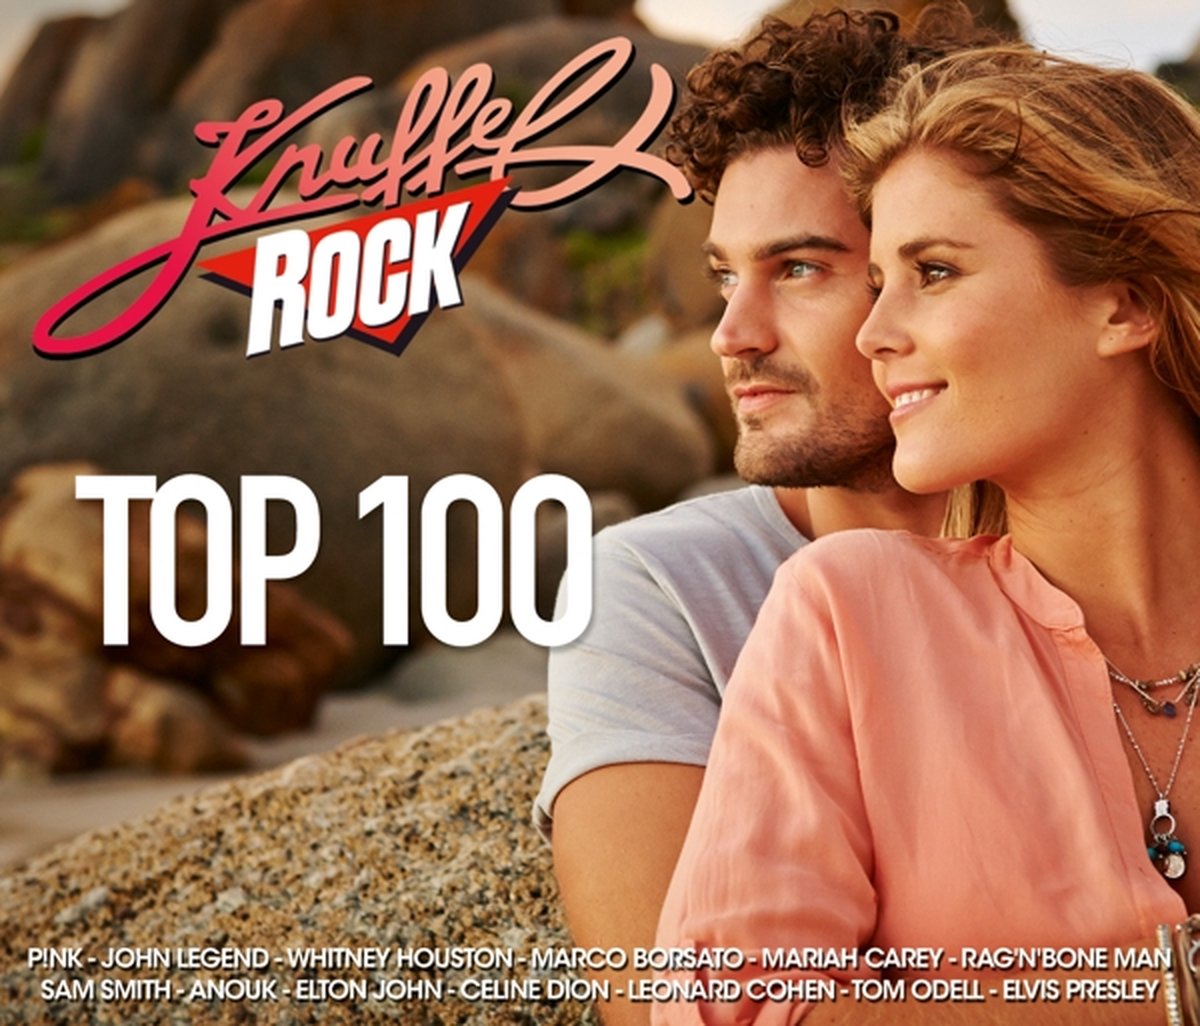 Knuffelrock Top 100 (2019) - V/a